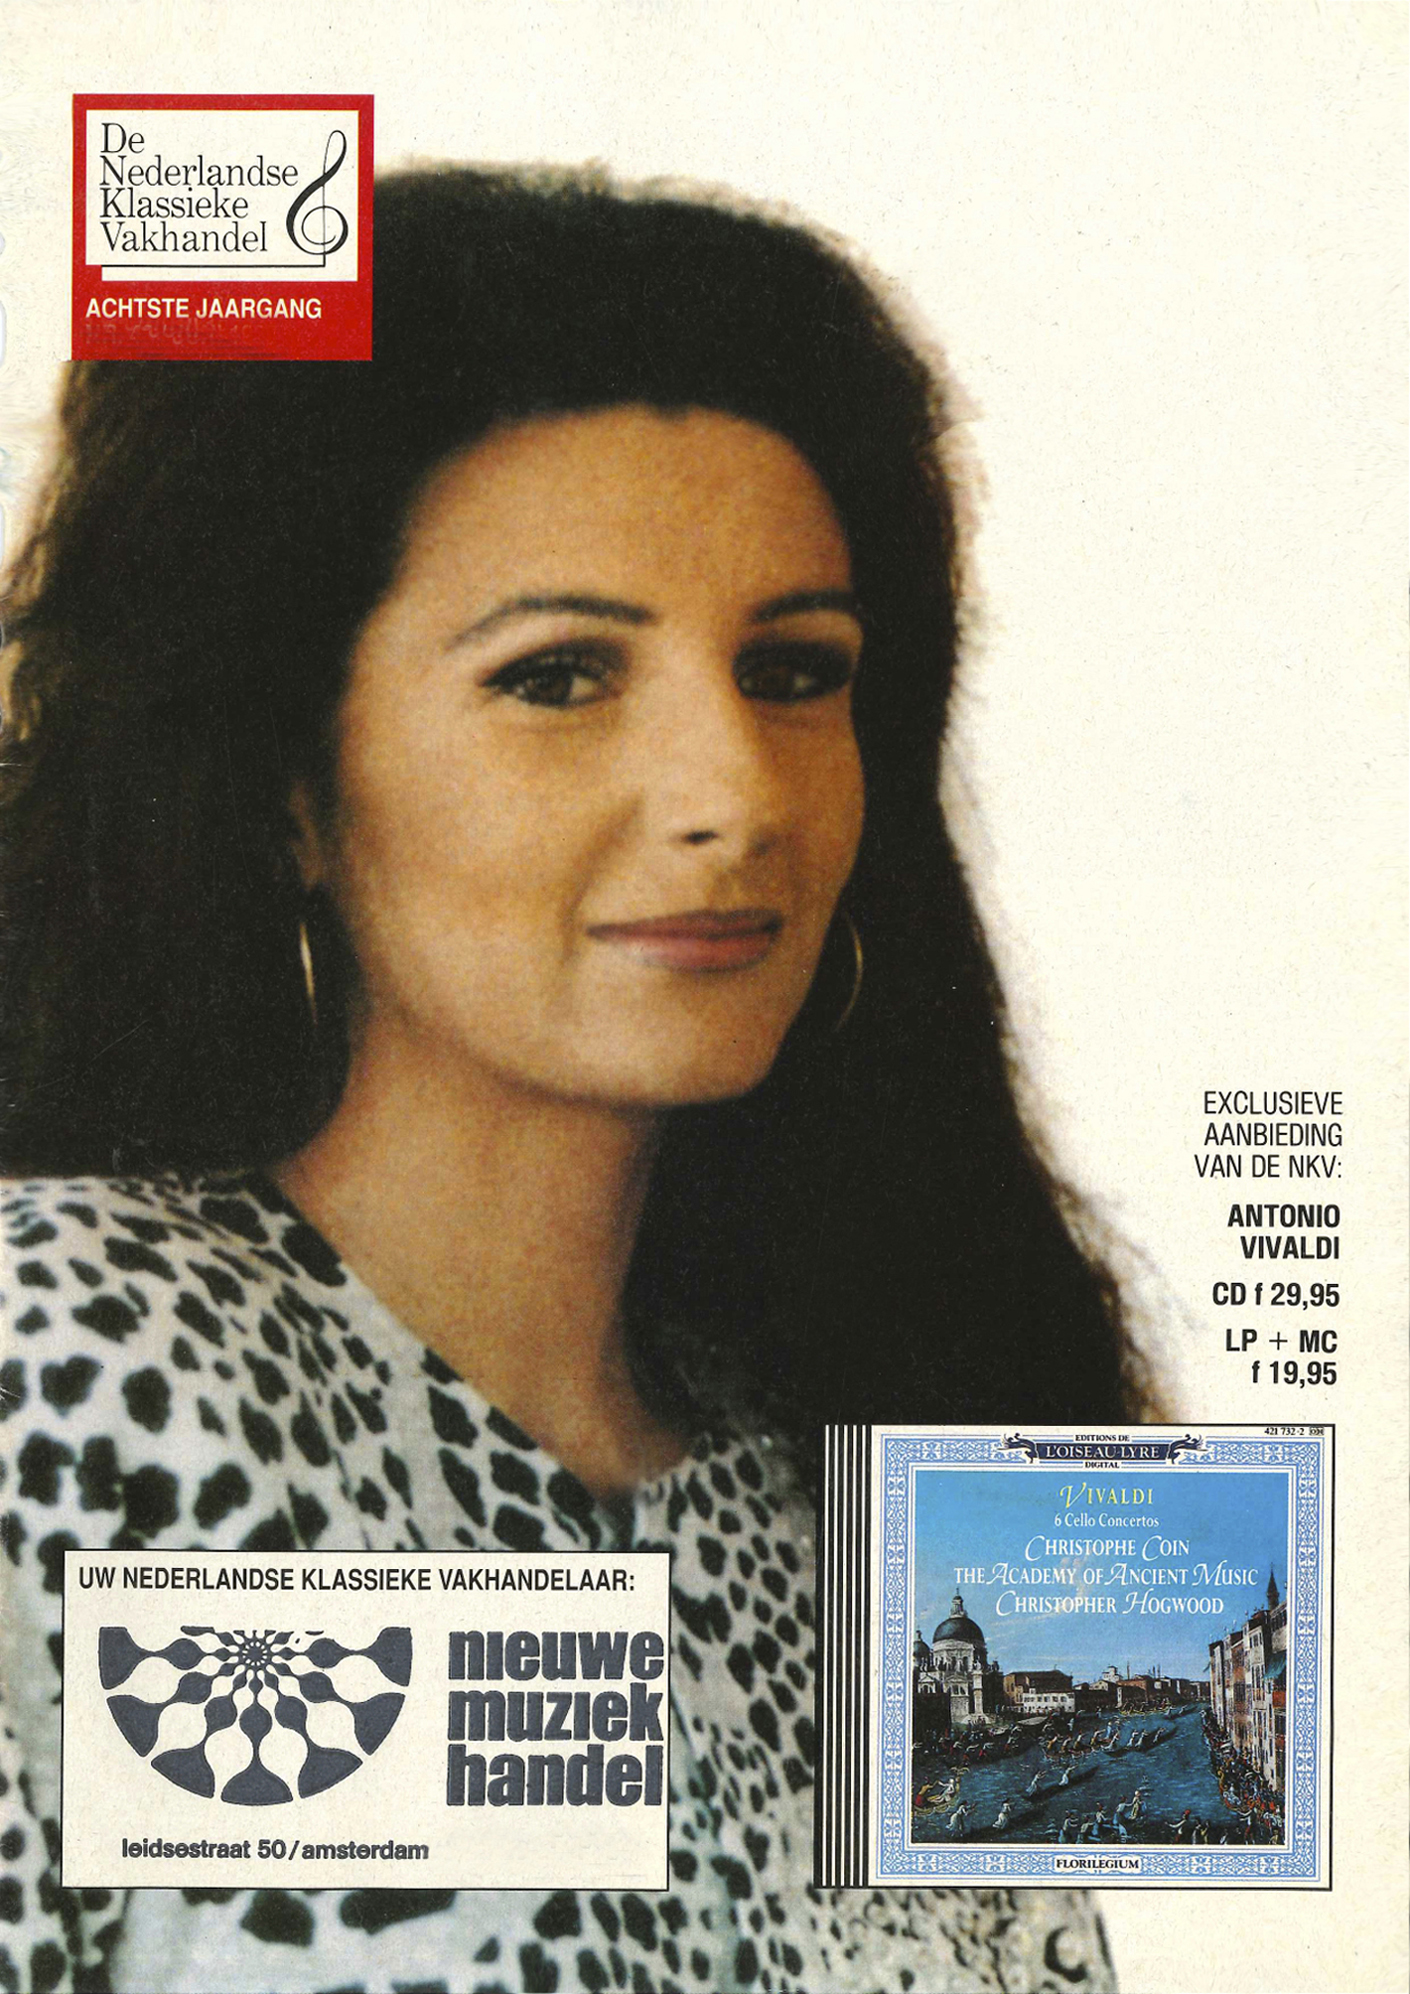 Lucia Aliberti⚘De Nederlandse Klassieke⚘Magazine⚘Cover⚘Interview⚘:http://www.luciaaliberti.it #luciaaliberti #denederlandseklassieke #magazine #cover #interview